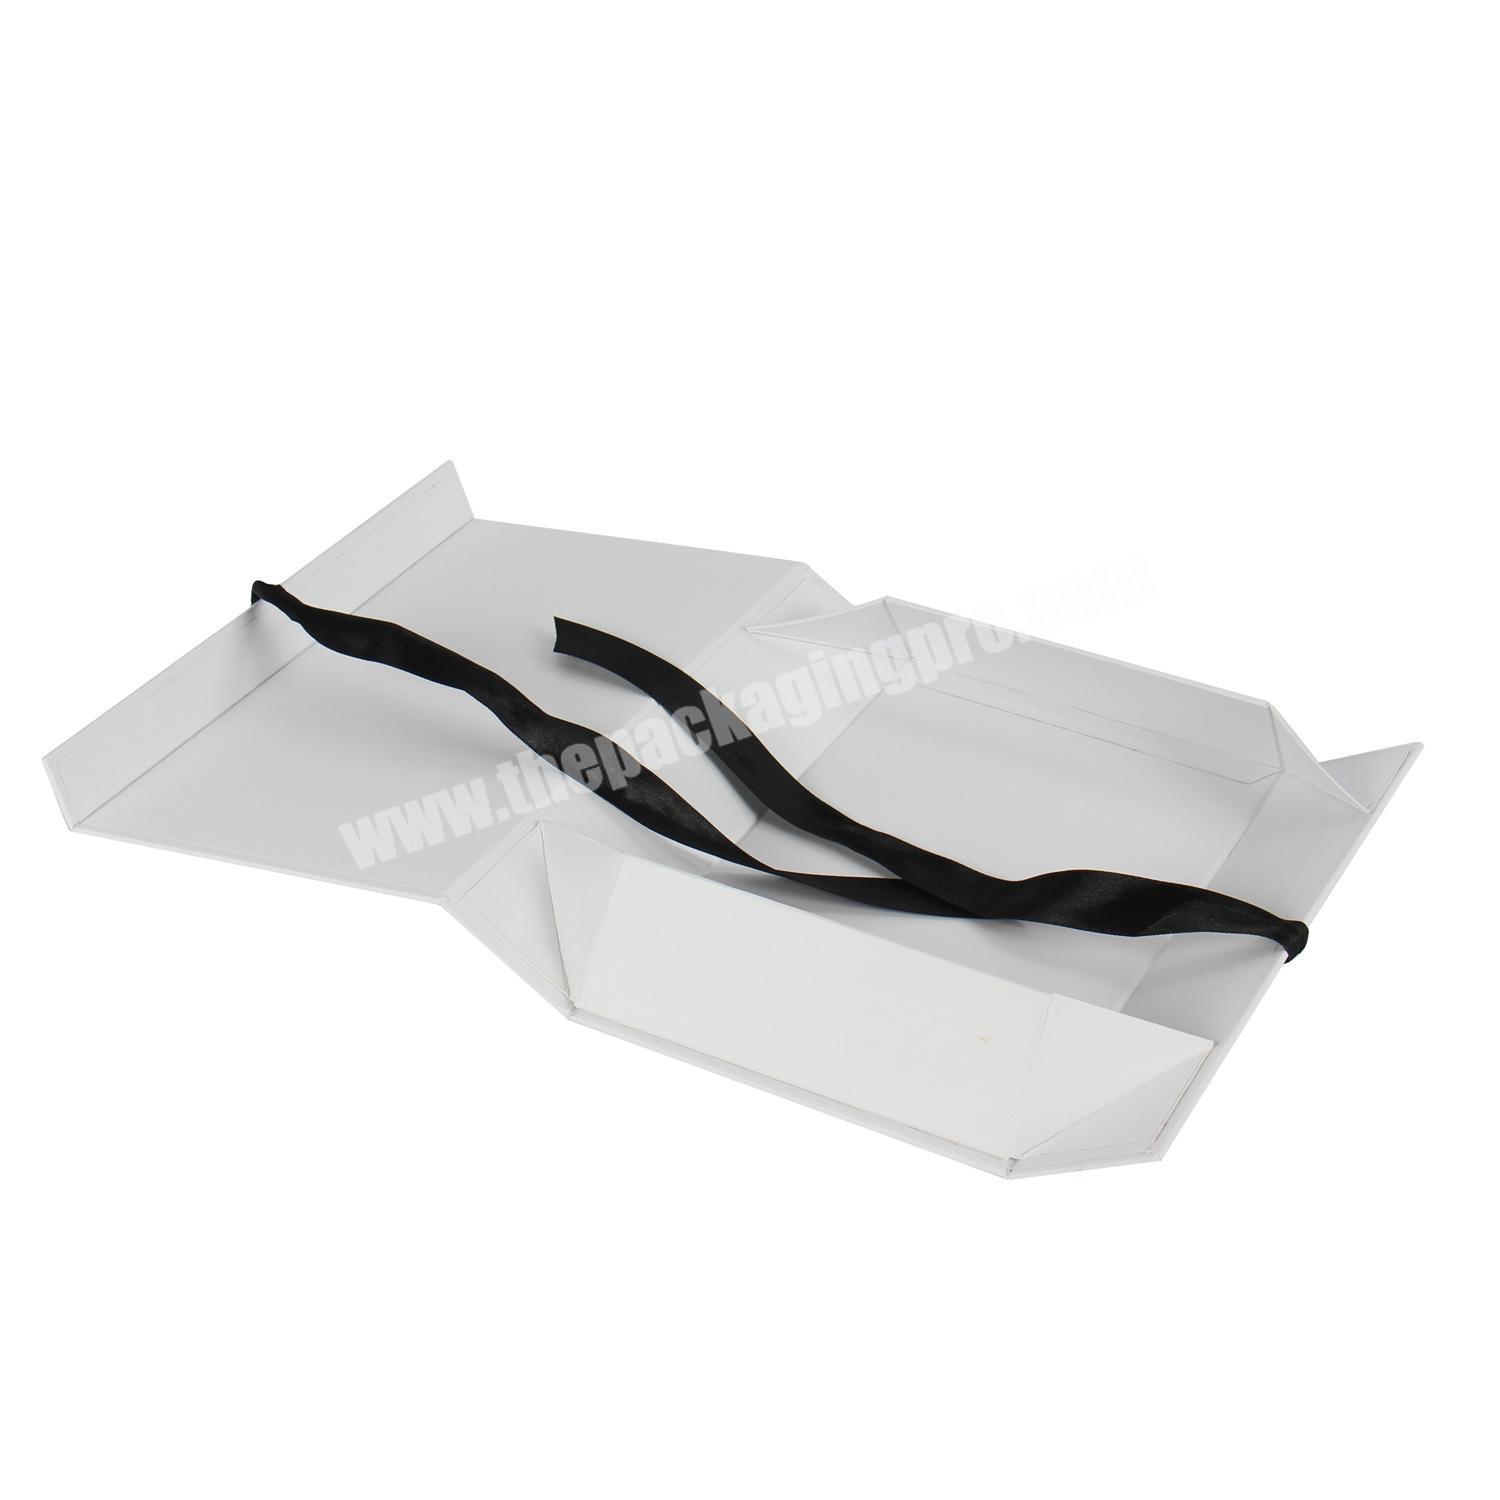 Black and white flat pack clamshell folding paper bikini bra underwear swimwear packaging box with ribbon